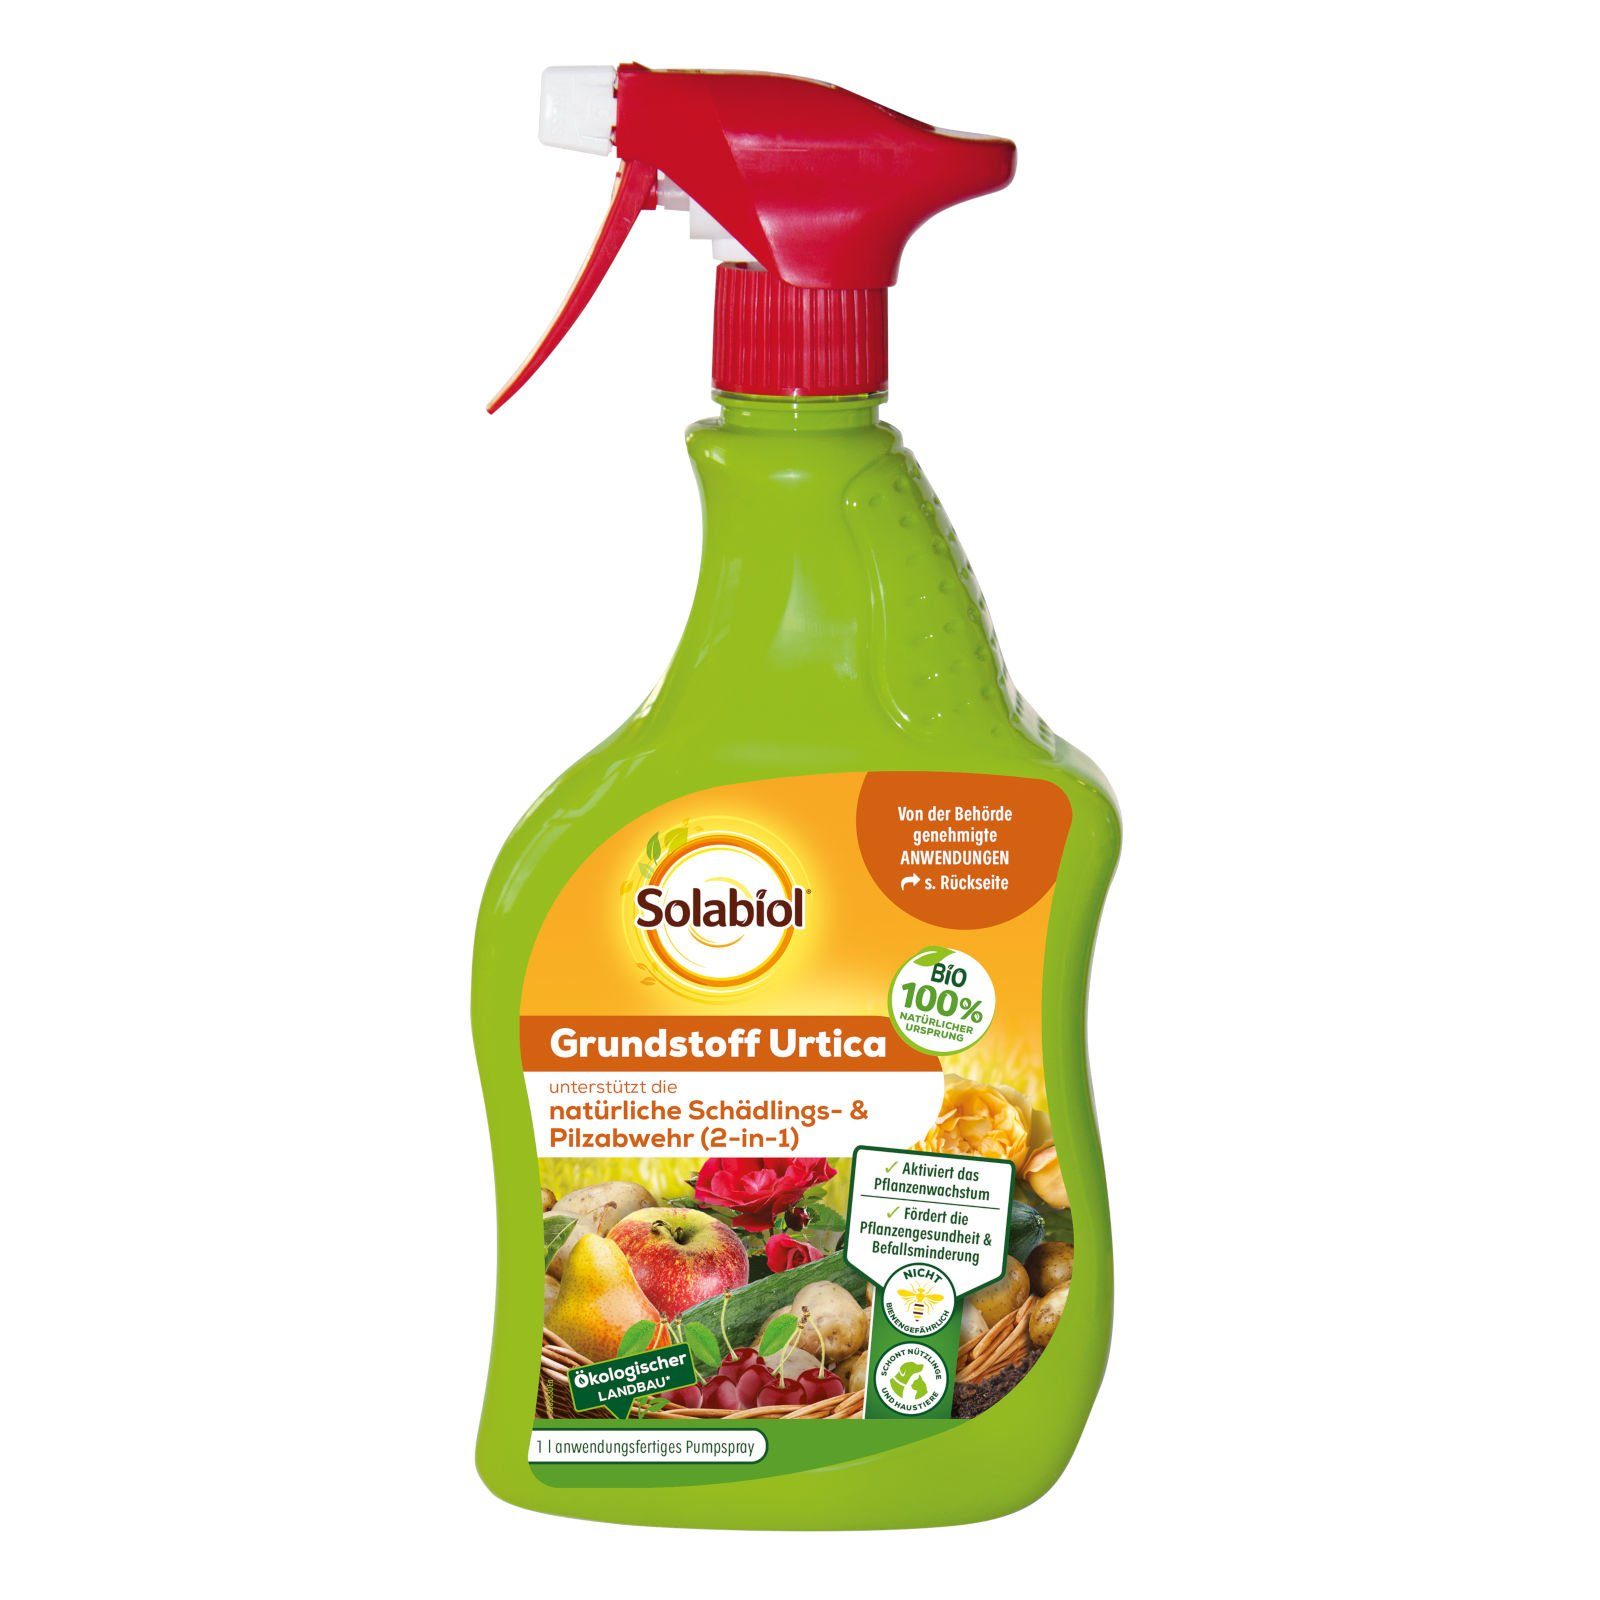 Solabiol Pflanzenstärkungsmittel Grundstoff Urtica Spray - 1 Liter